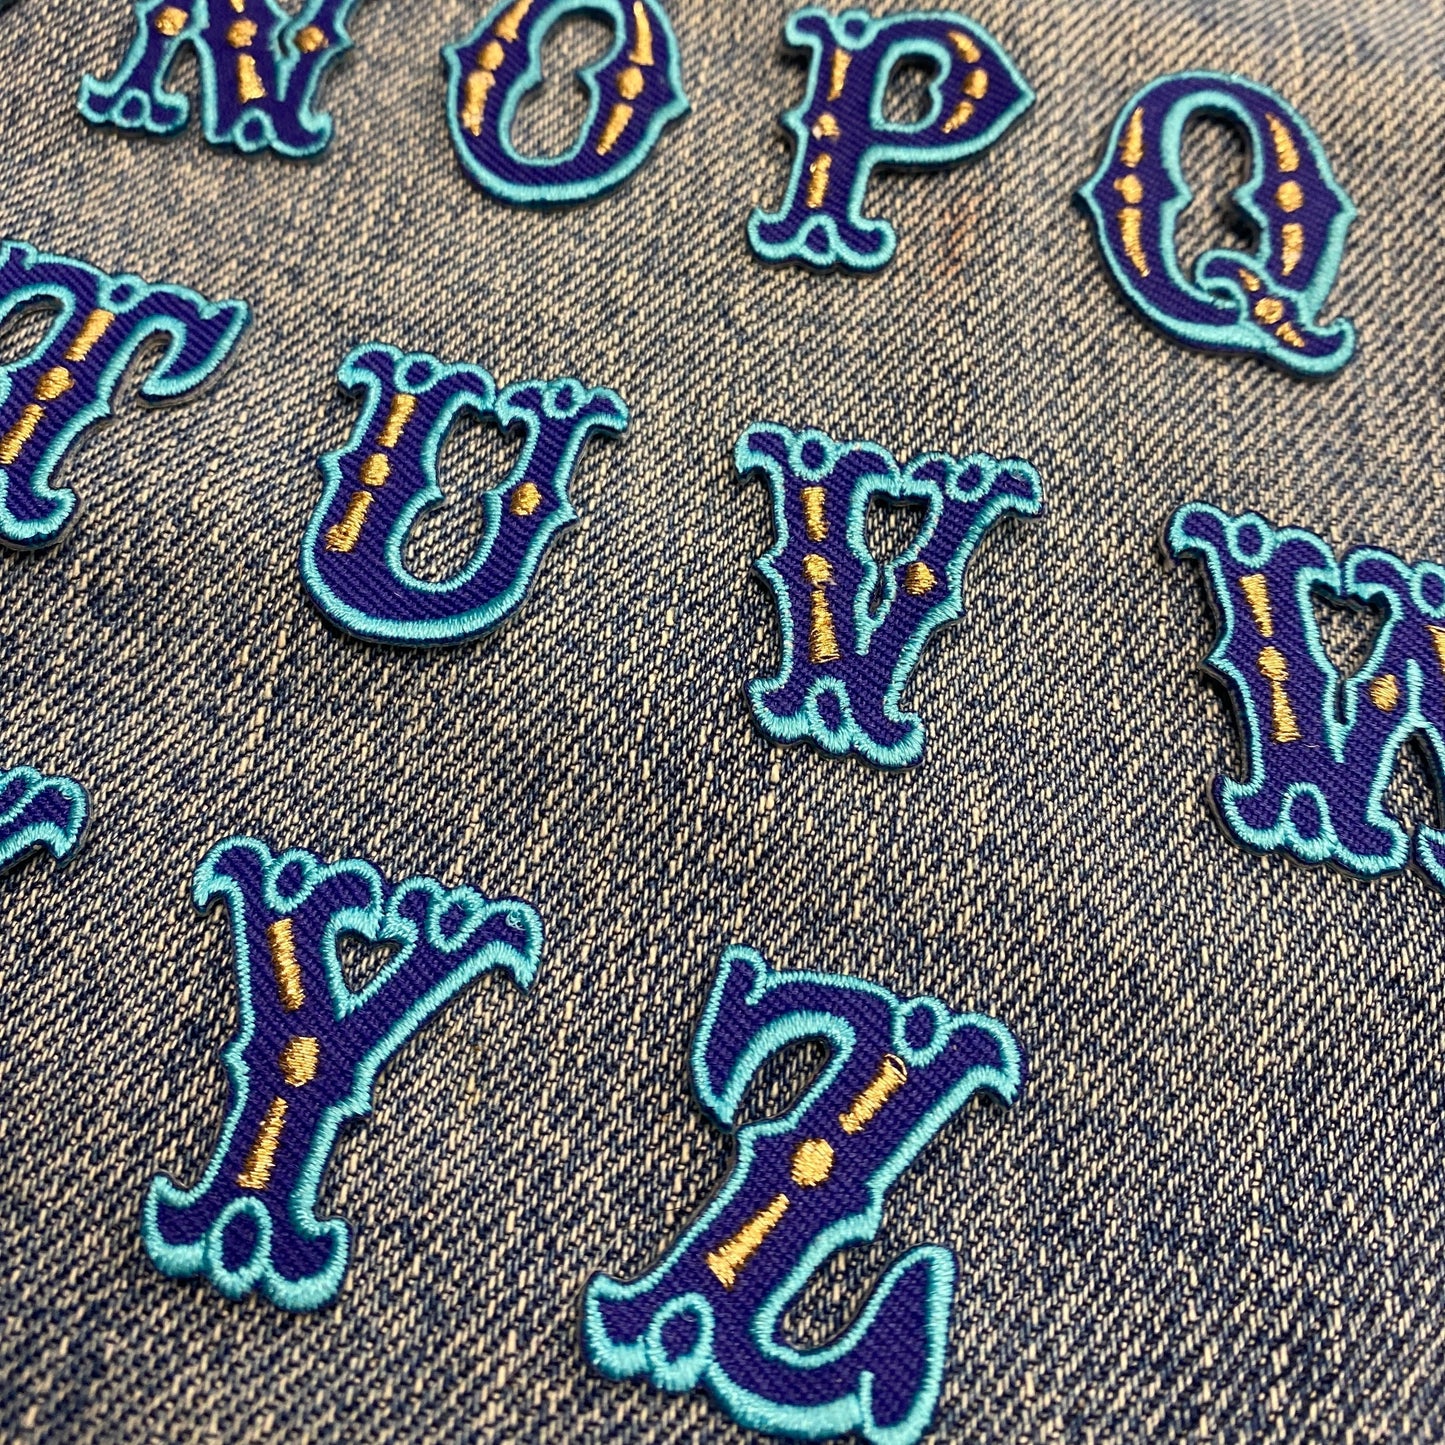 Alphabet Patches - “U” Blue